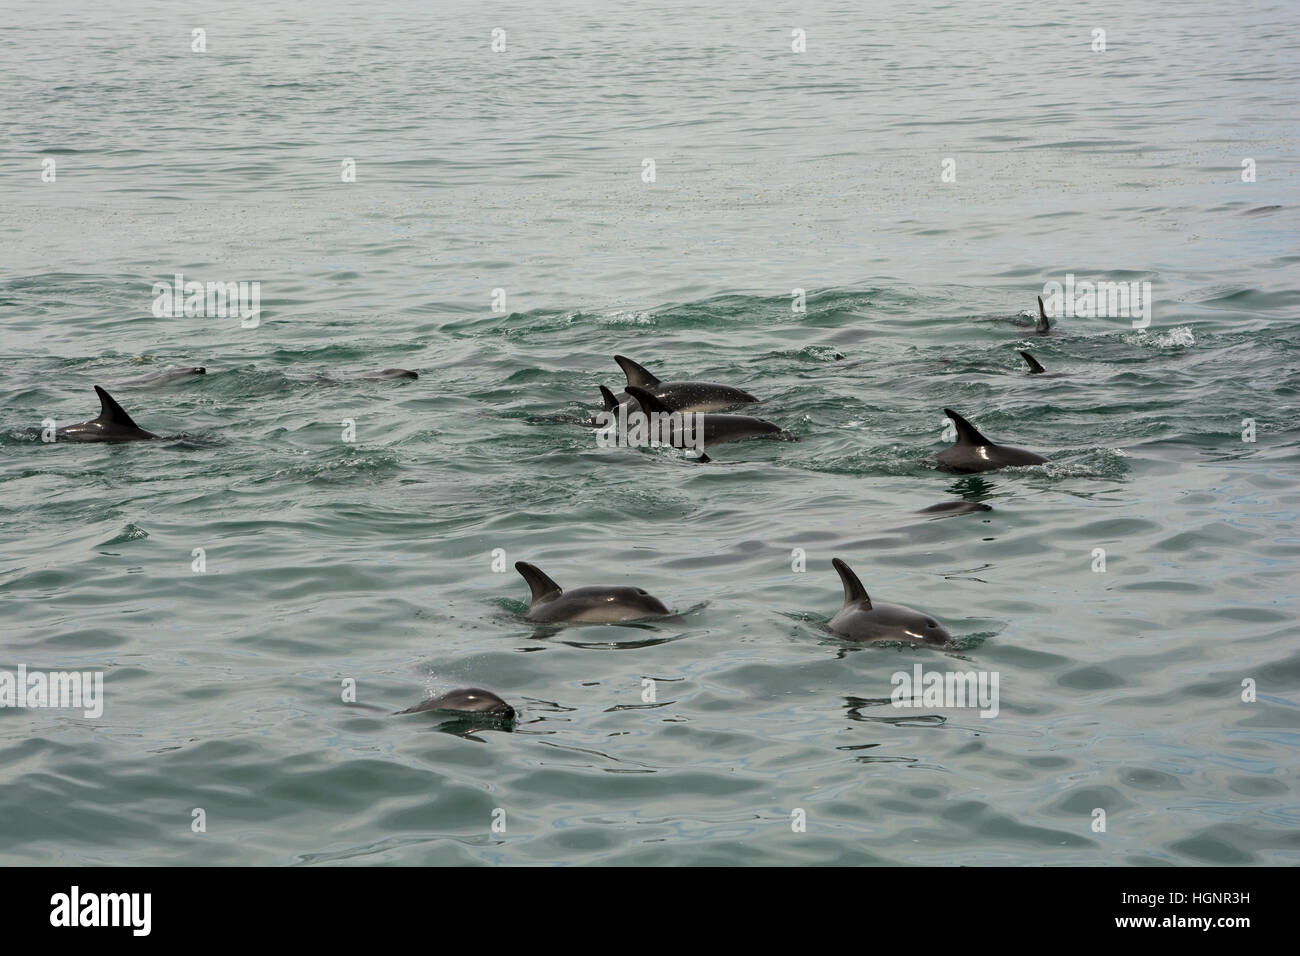 Dusky Dolphin pod swimming in the Pacific Ocean near Kaikoura in New Zealand. Stock Photo